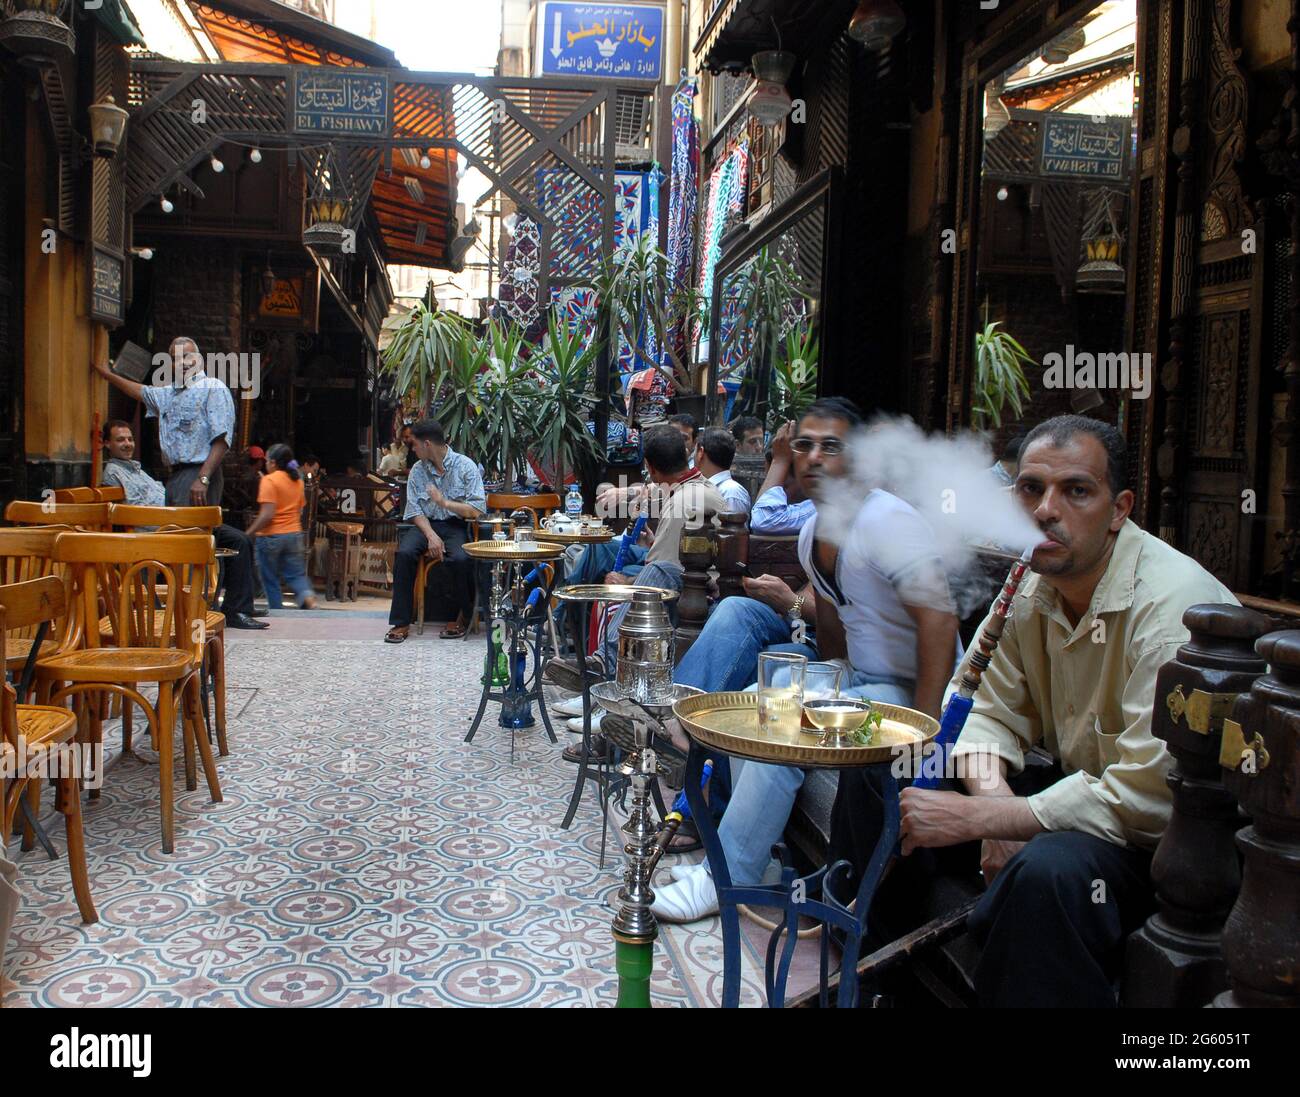 Shisha Pfeife rauchen El Fishawy Café im alten Khan el Khalili Basar in Kairo, Ägypten. Rauchen Shisha Pfeife Stockfoto